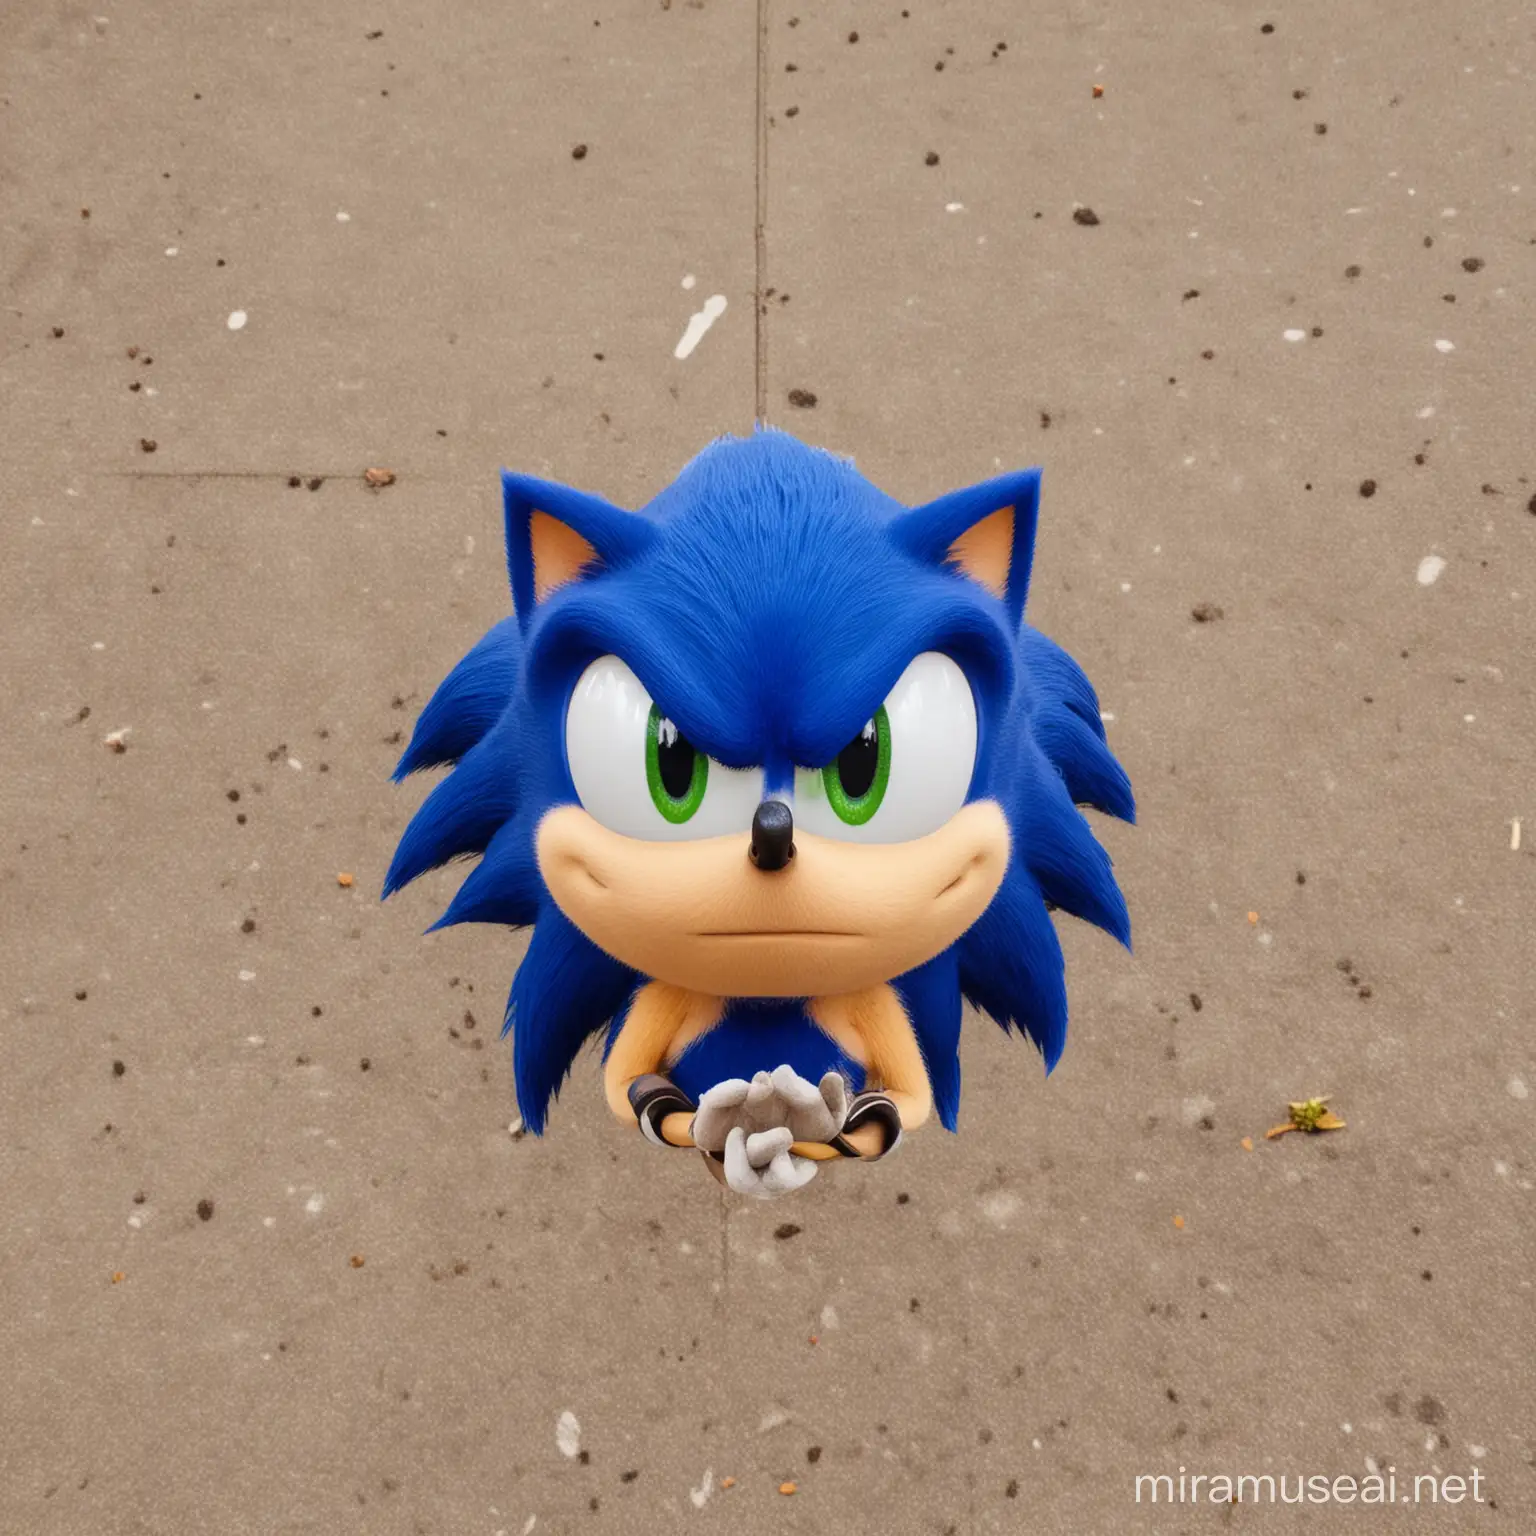 Sonic the hedgehog in pareidolia